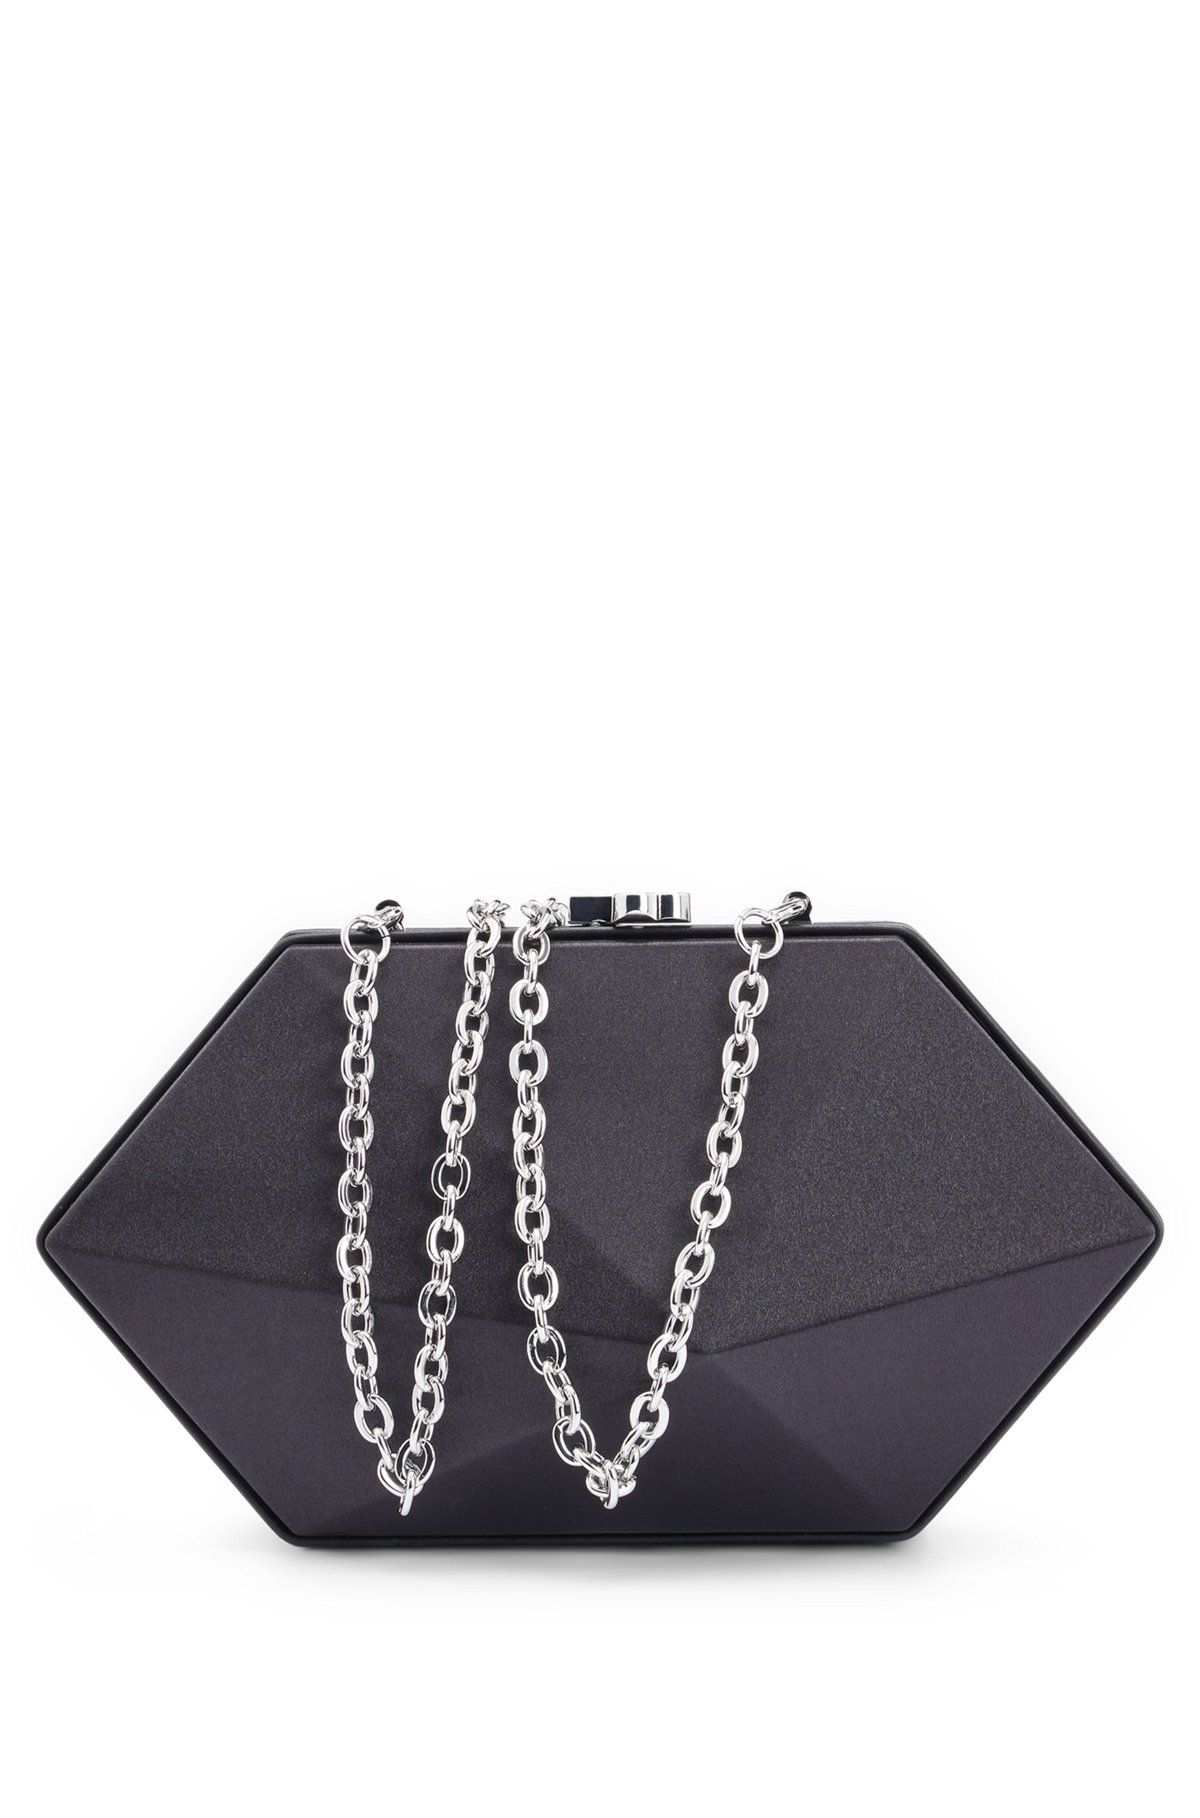 Satin clutch bag with detachable chain strap, Black